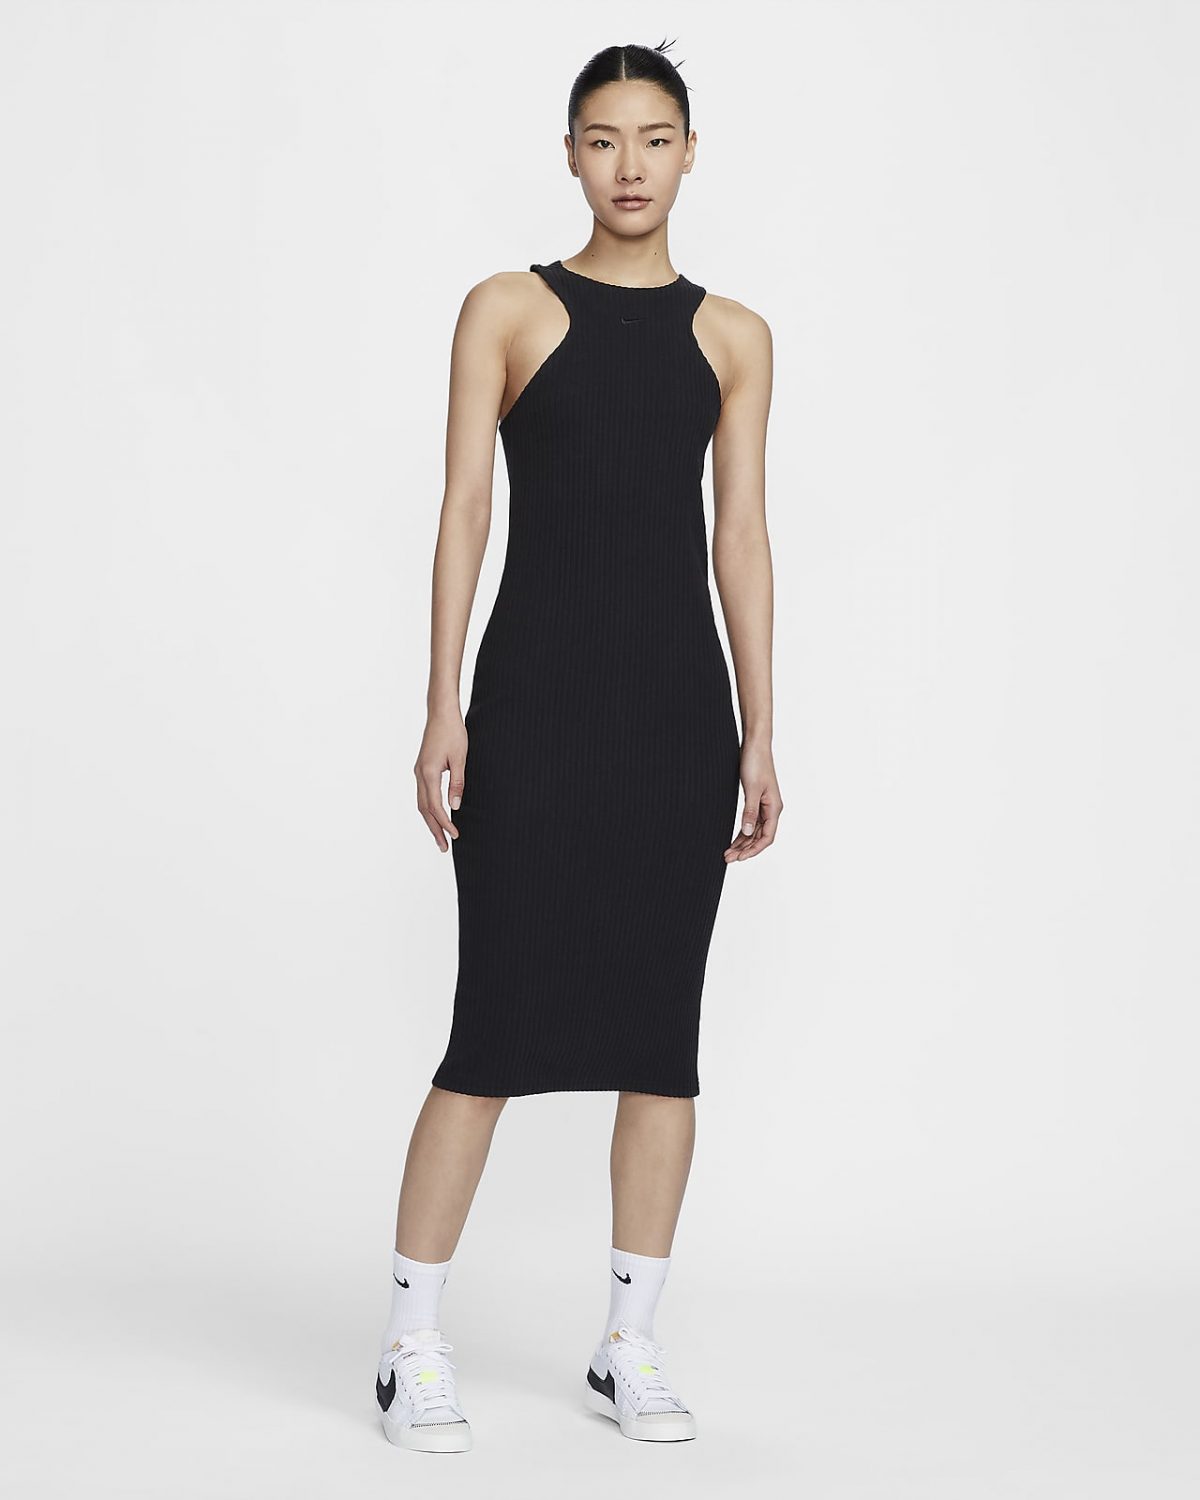 Женская платье Nike Sportswear Chill Knit фото